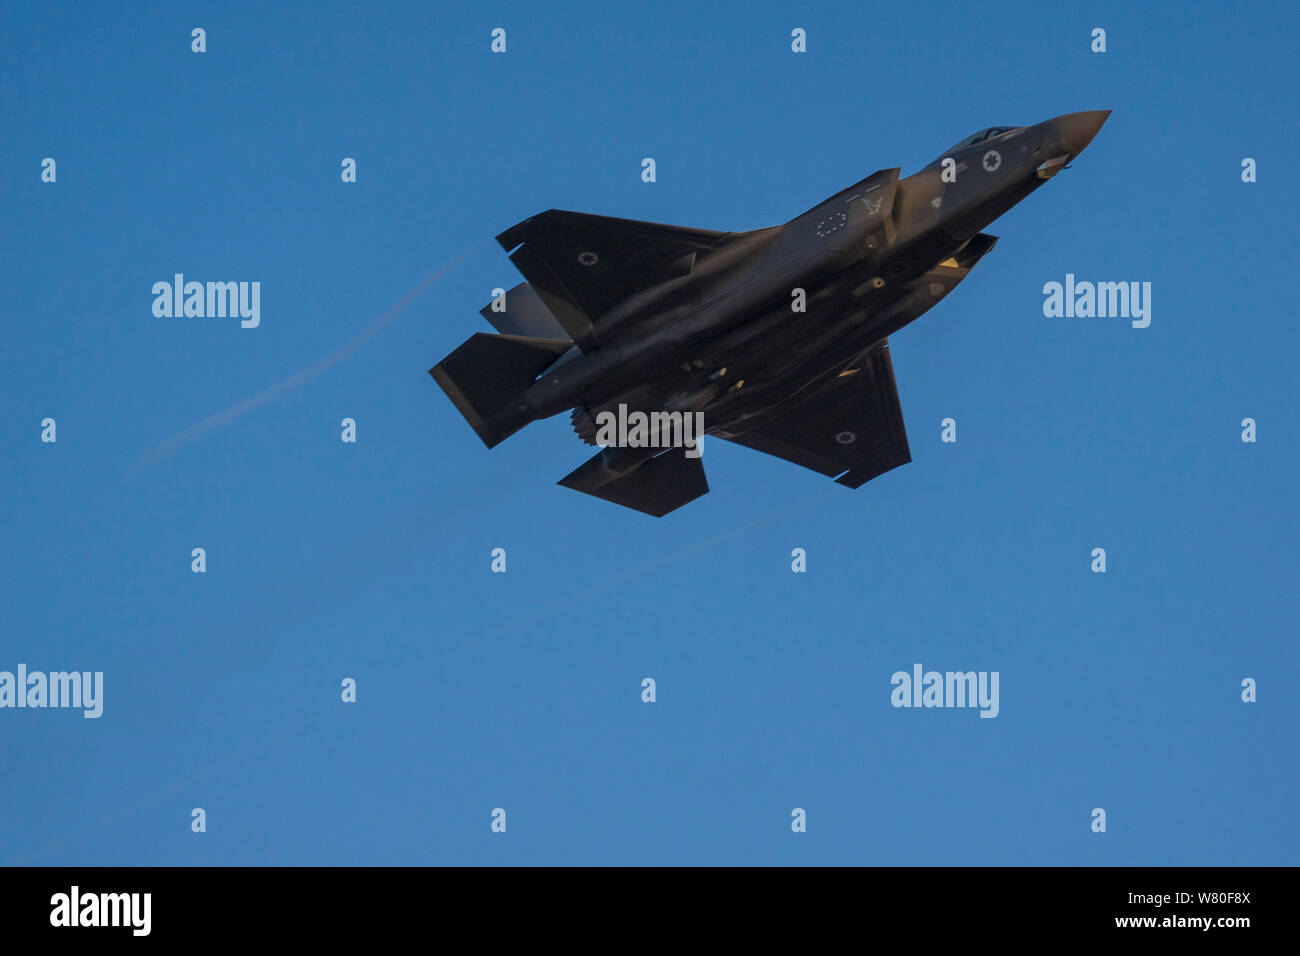 Israeli F-35 Lightning II 'Adir' stealth fighter planes flies low during an airshow in Israel. Stock Photo